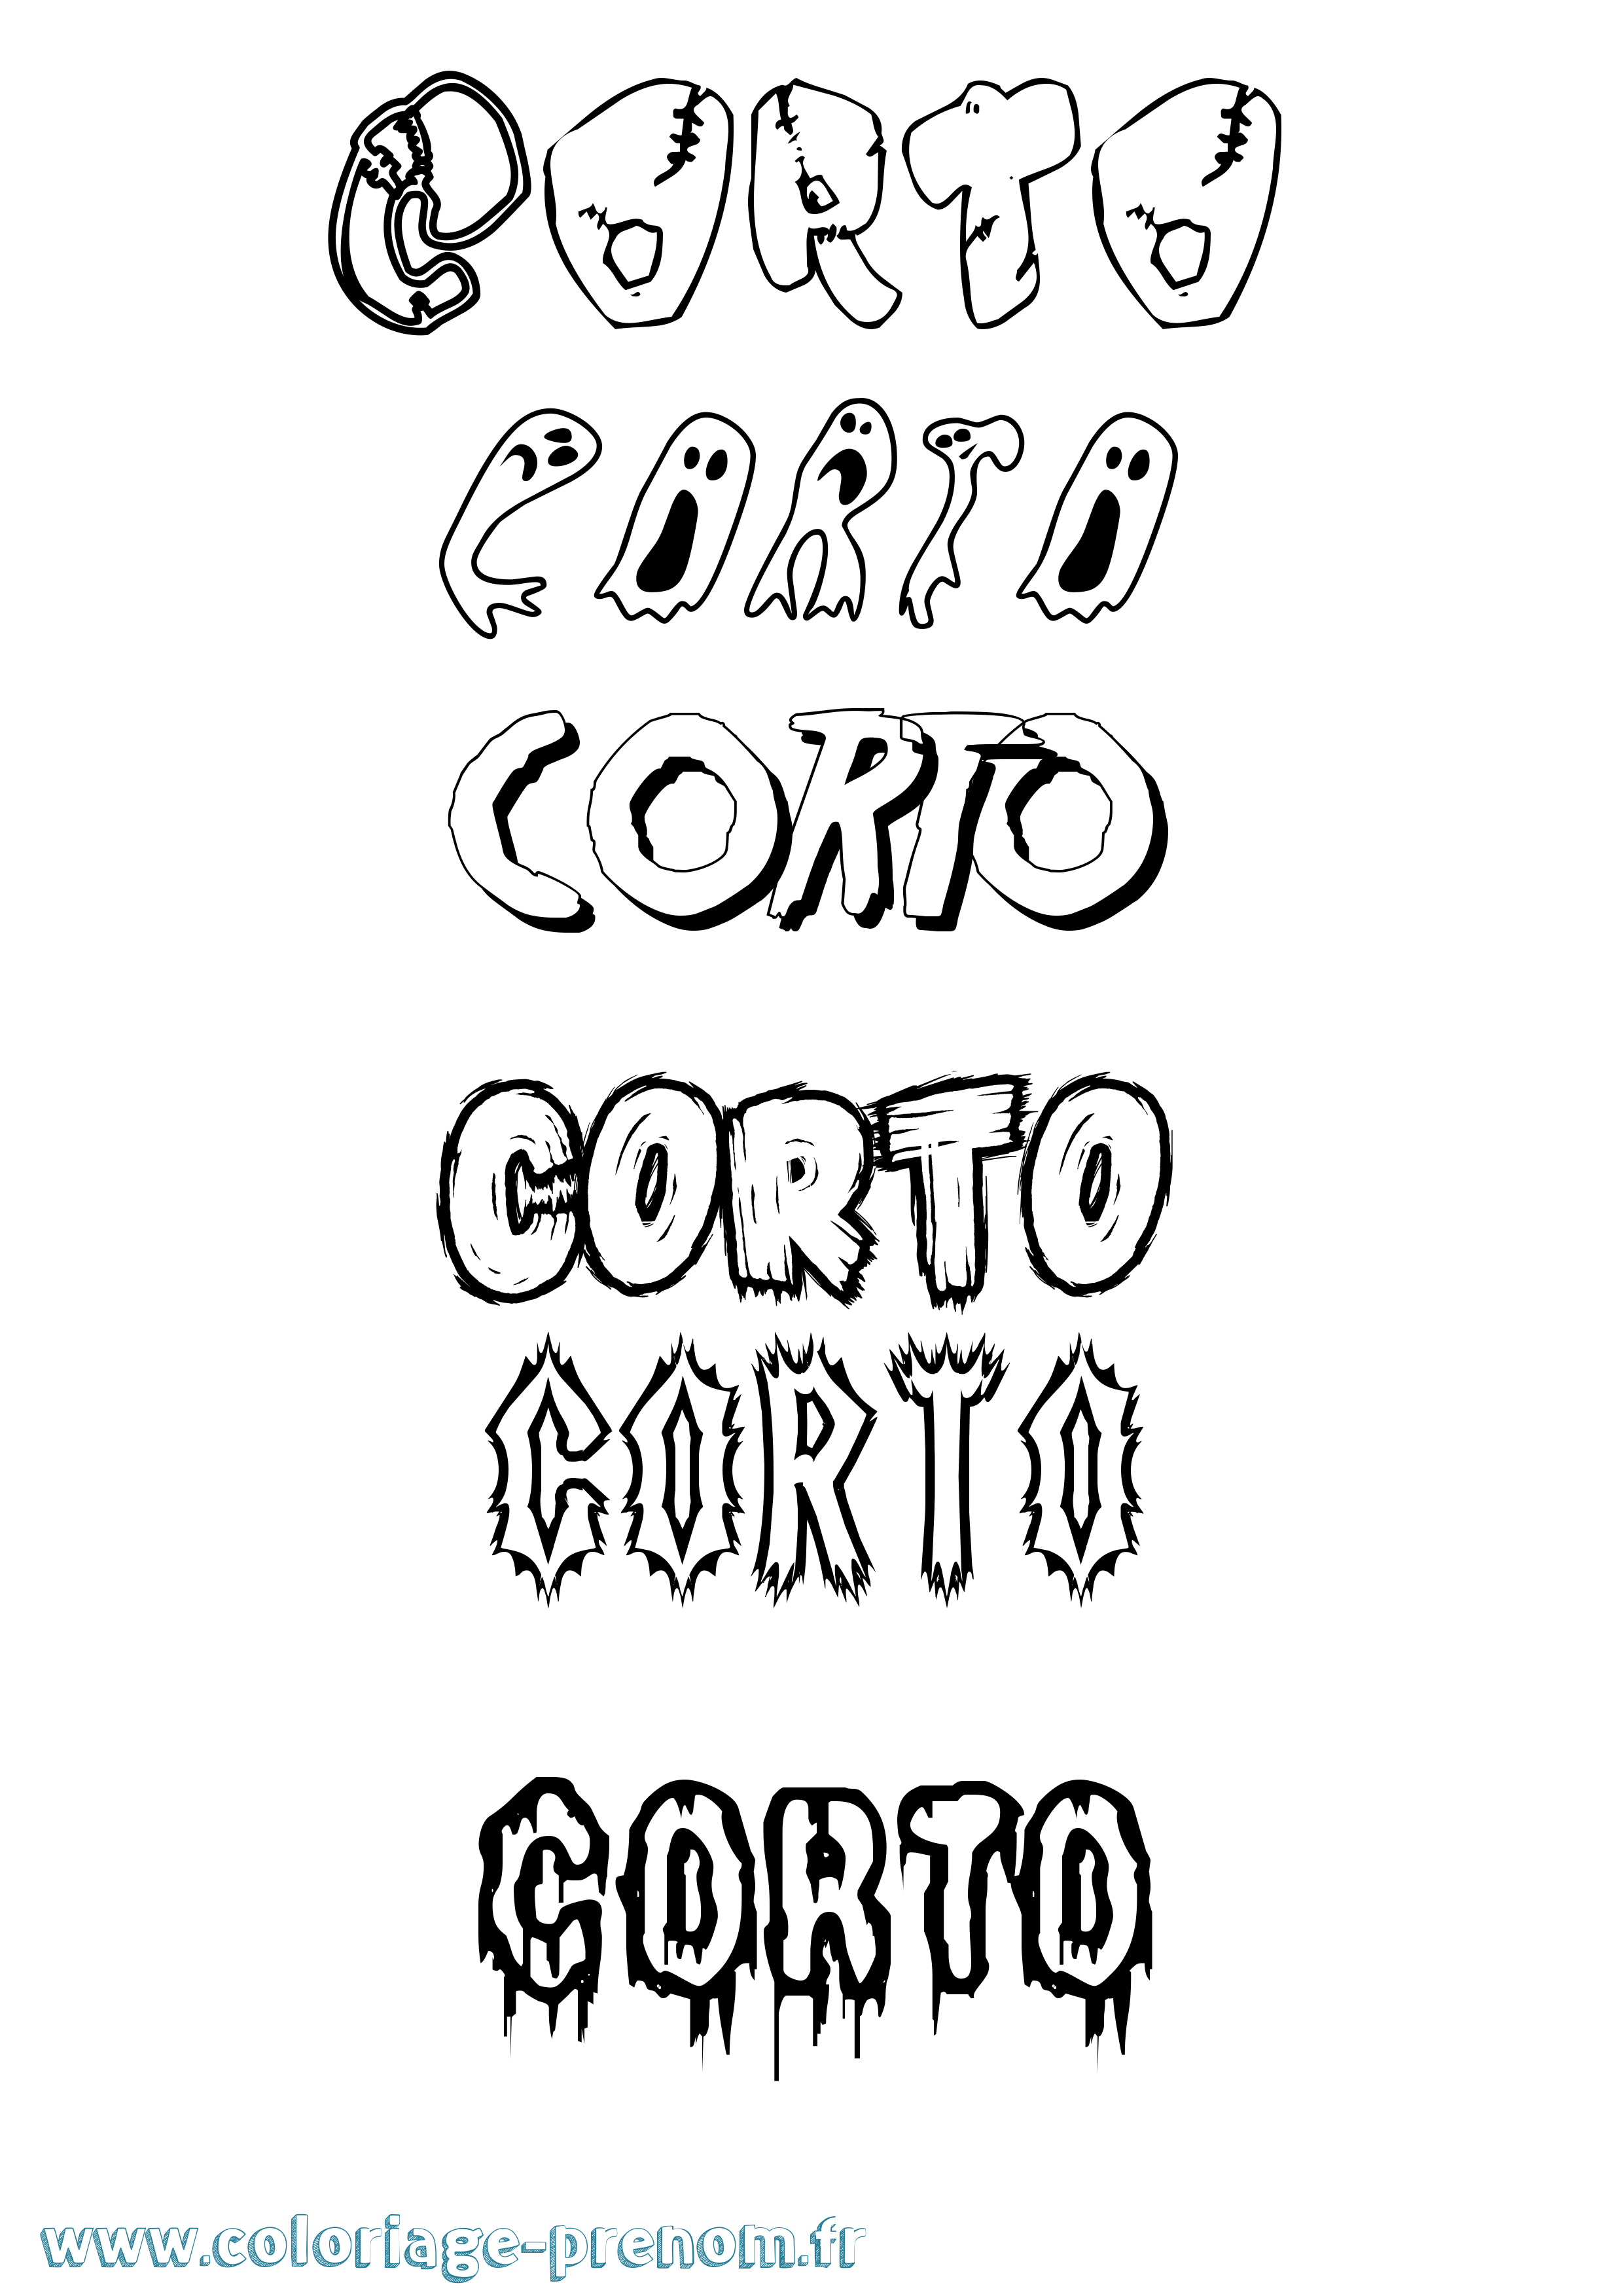 Coloriage prénom Corto